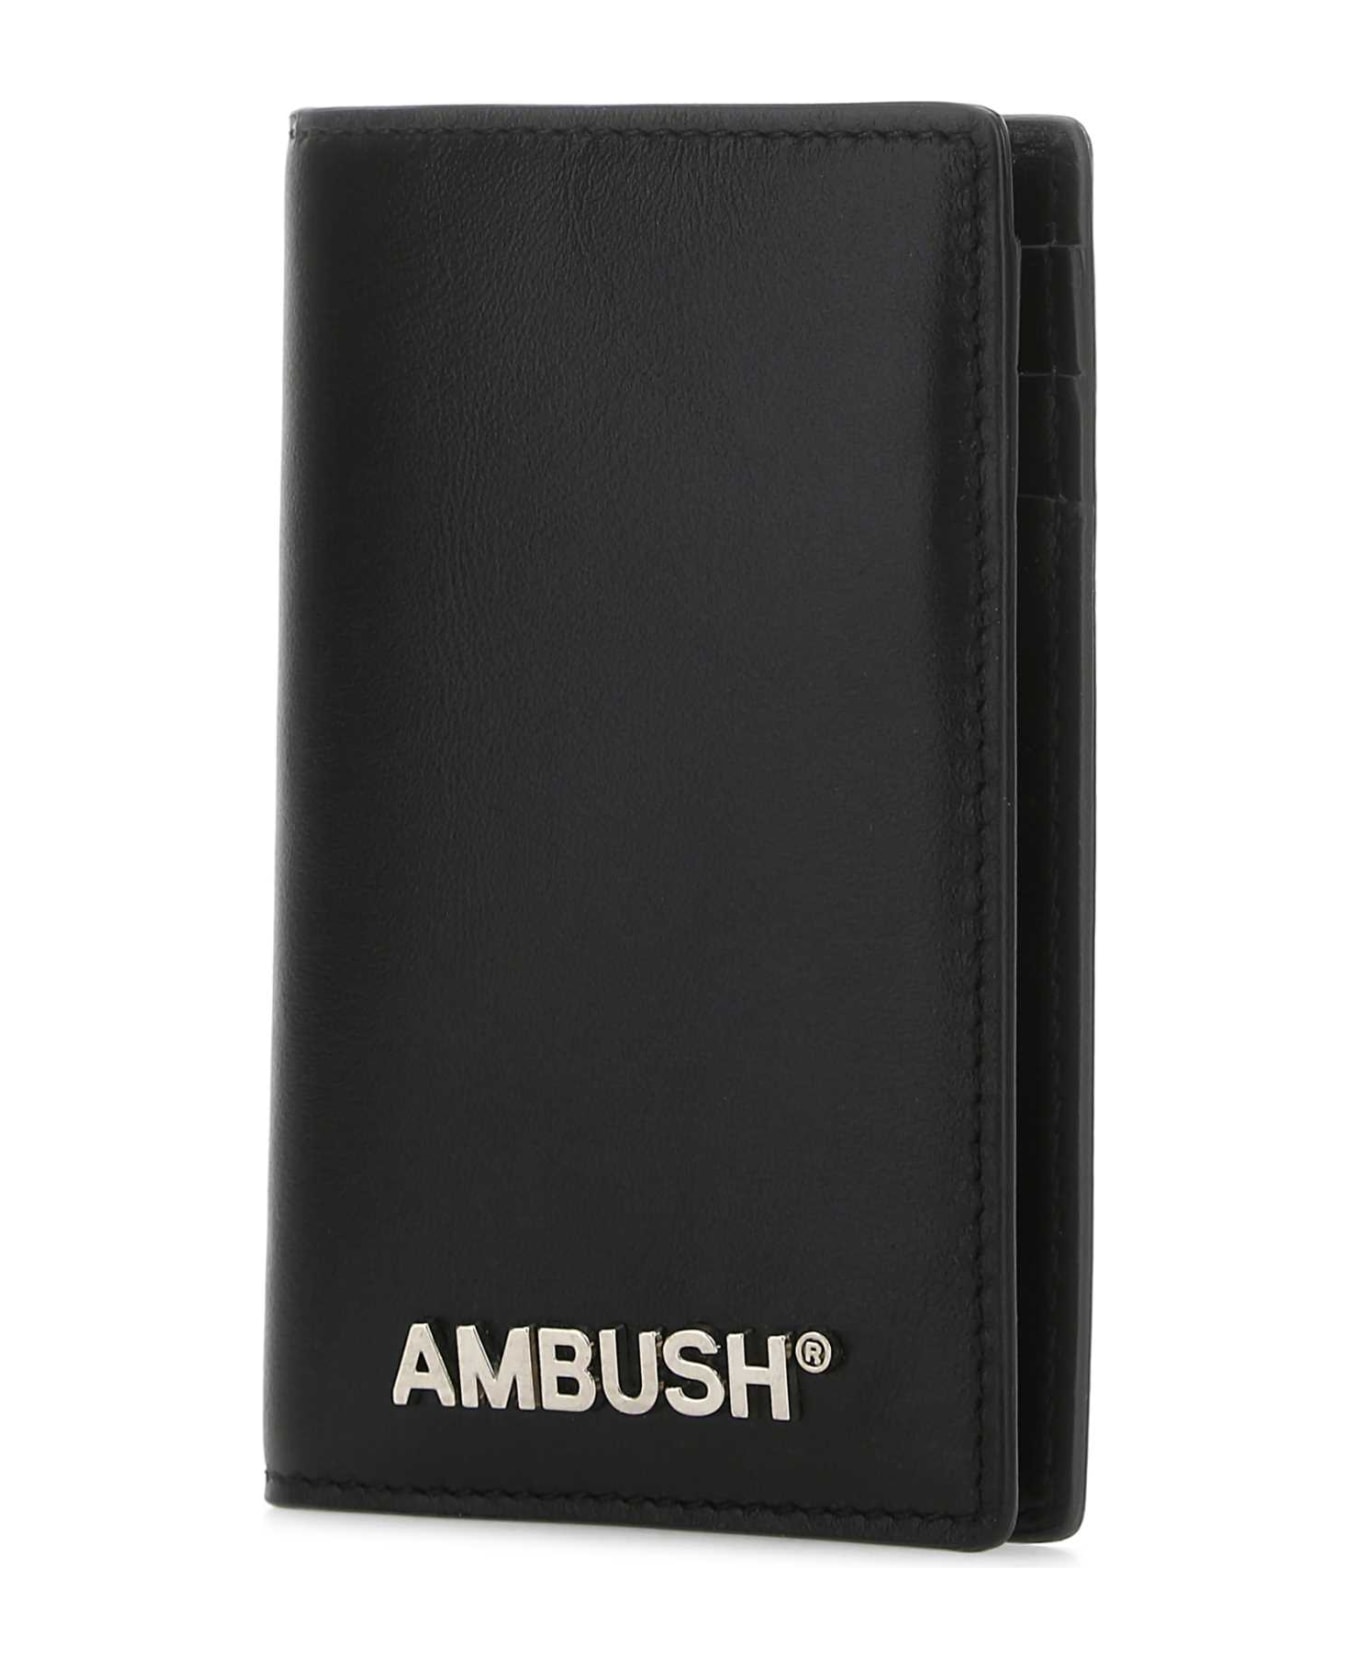 AMBUSH Black Leather Card Holder - 1072